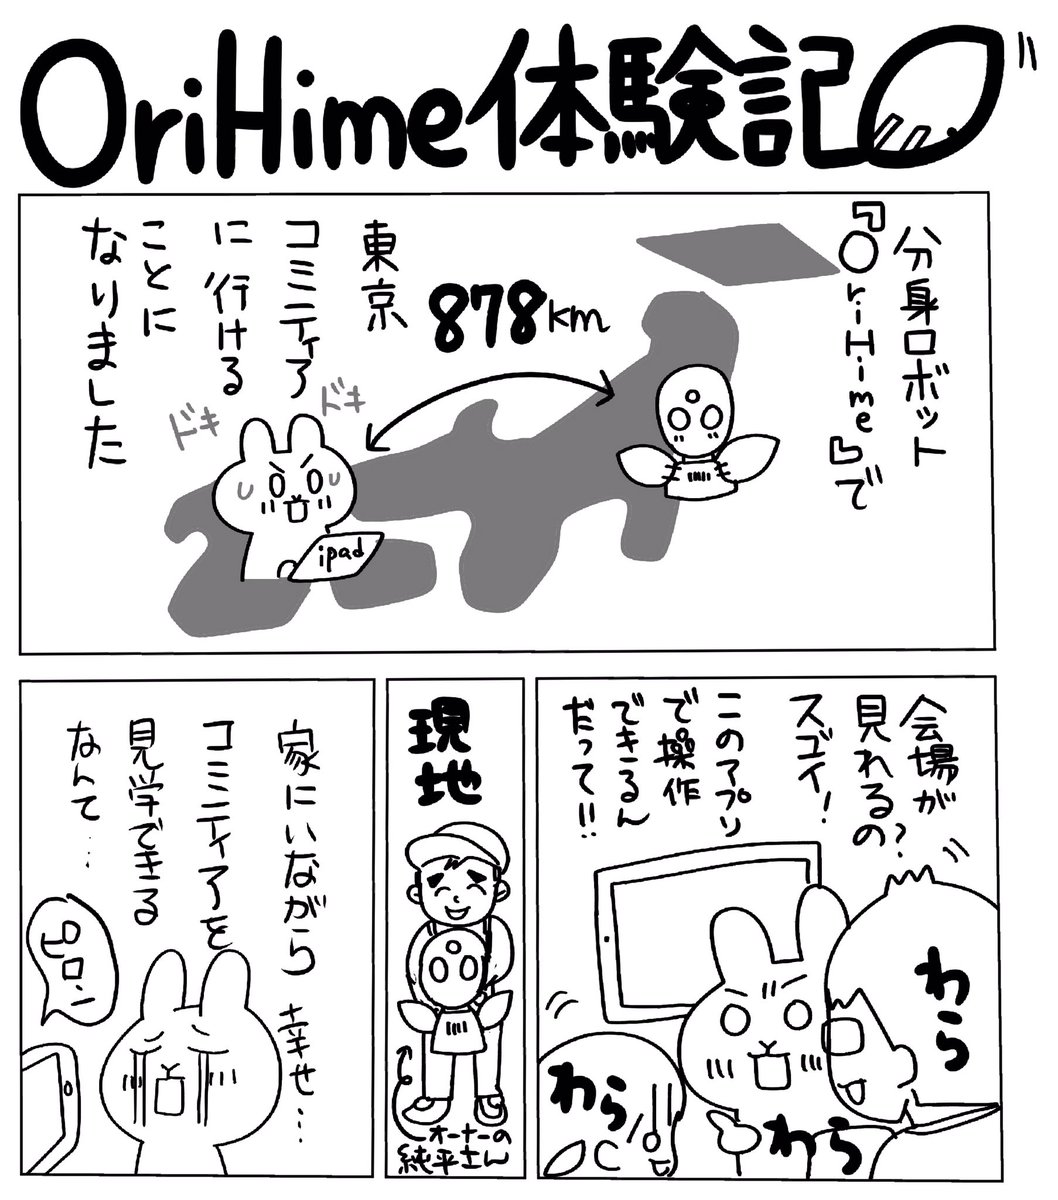 OriHimeコミティア体験記
#orihime
無茶苦茶楽しかったし現地の楽しさが伝わってきました!リアルでも行きたいです! https://t.co/oeRCXvK8MS 